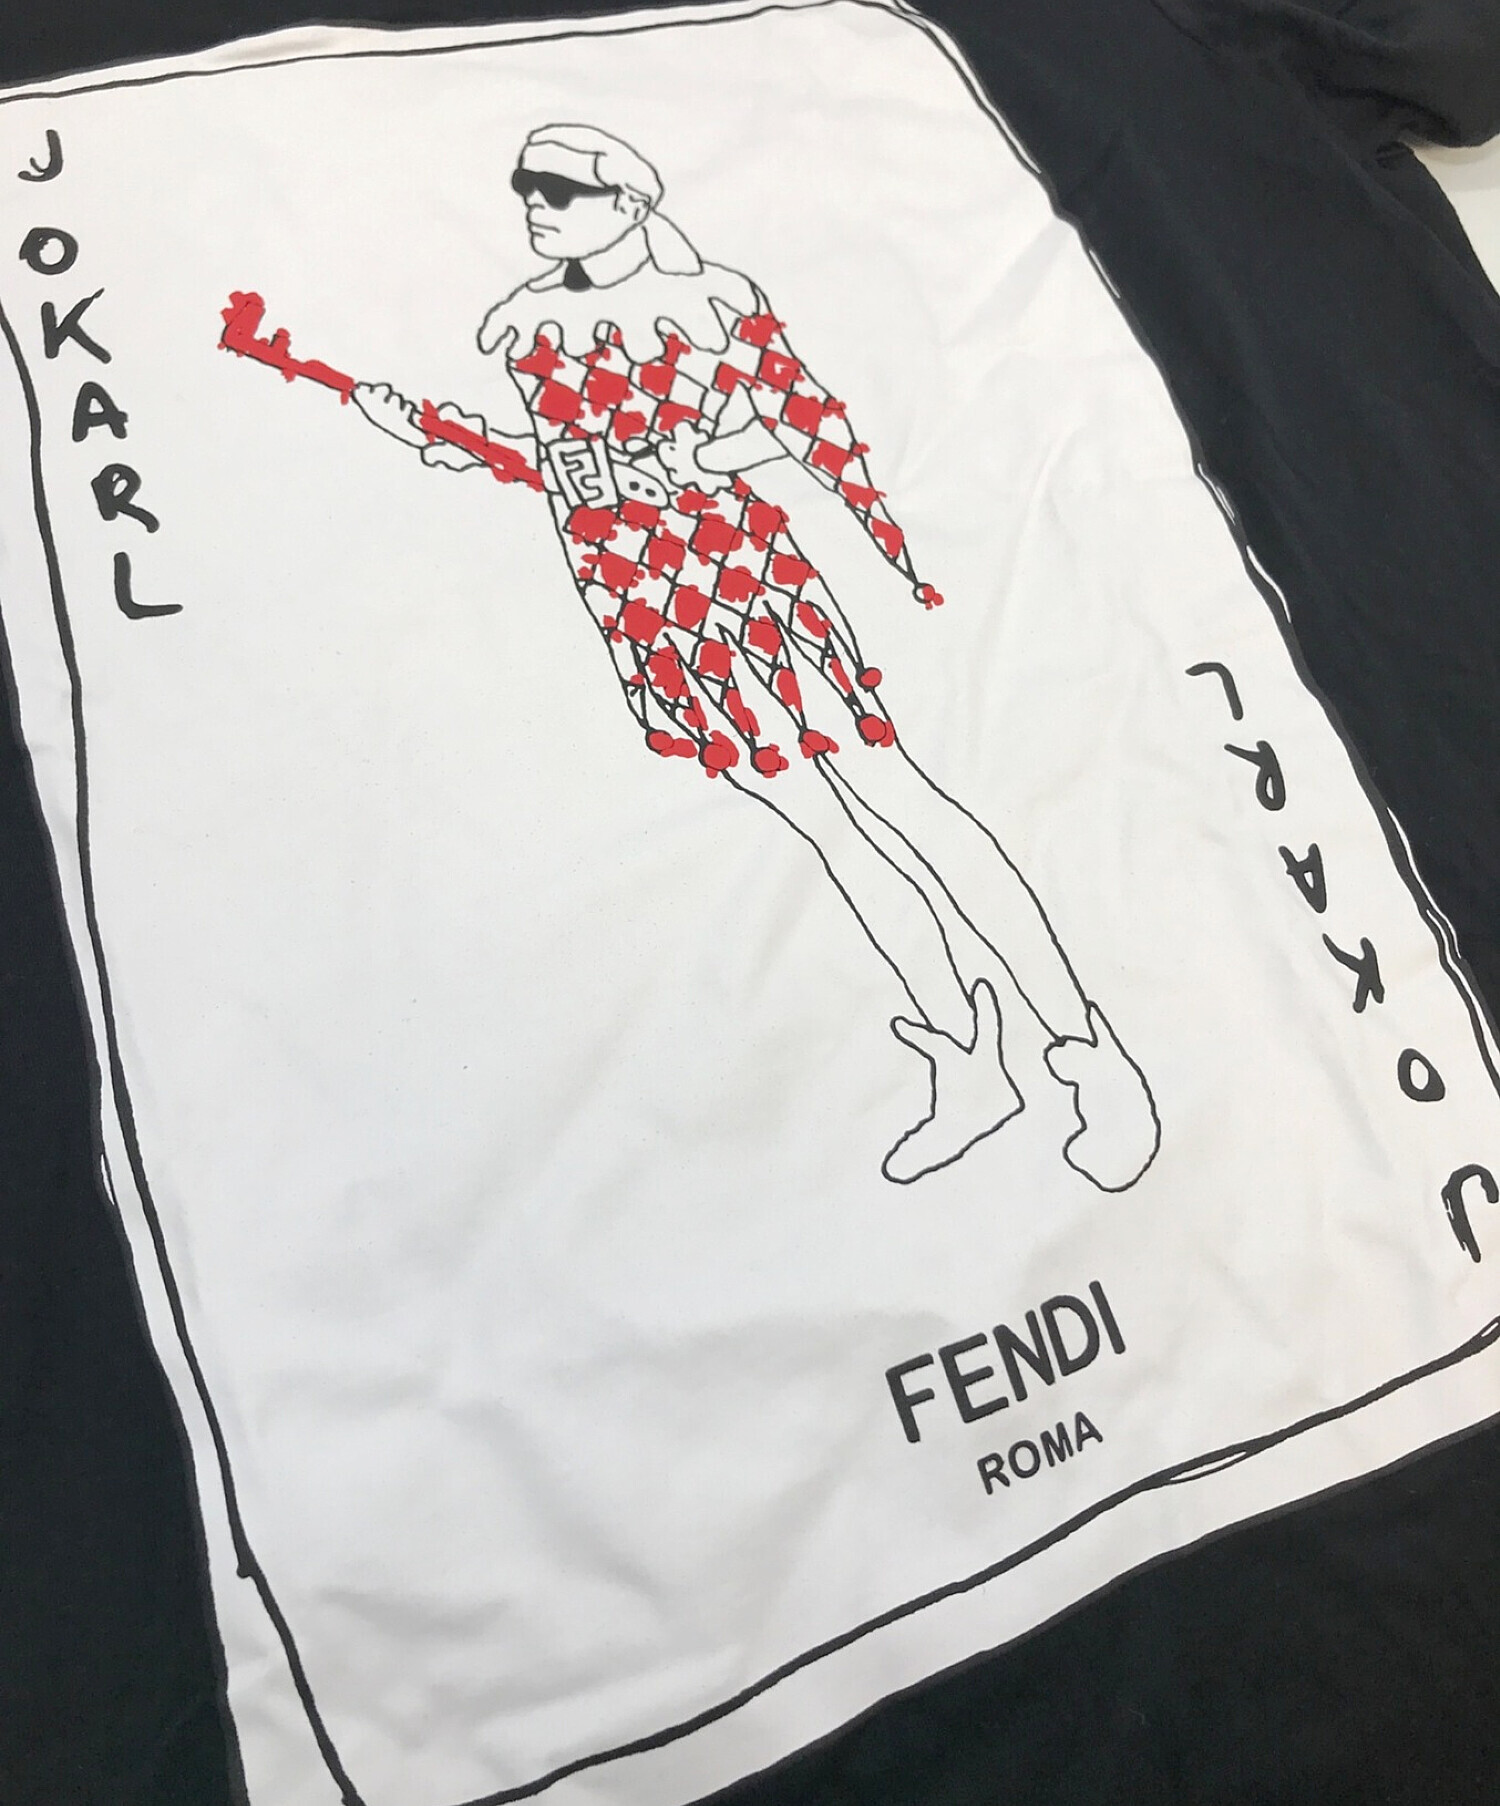 FENDI (フェンディ) Karl Lagerfeld (カール ラガーフェルド) JOKARLプリントTシャツ ブラック サイズ:XS